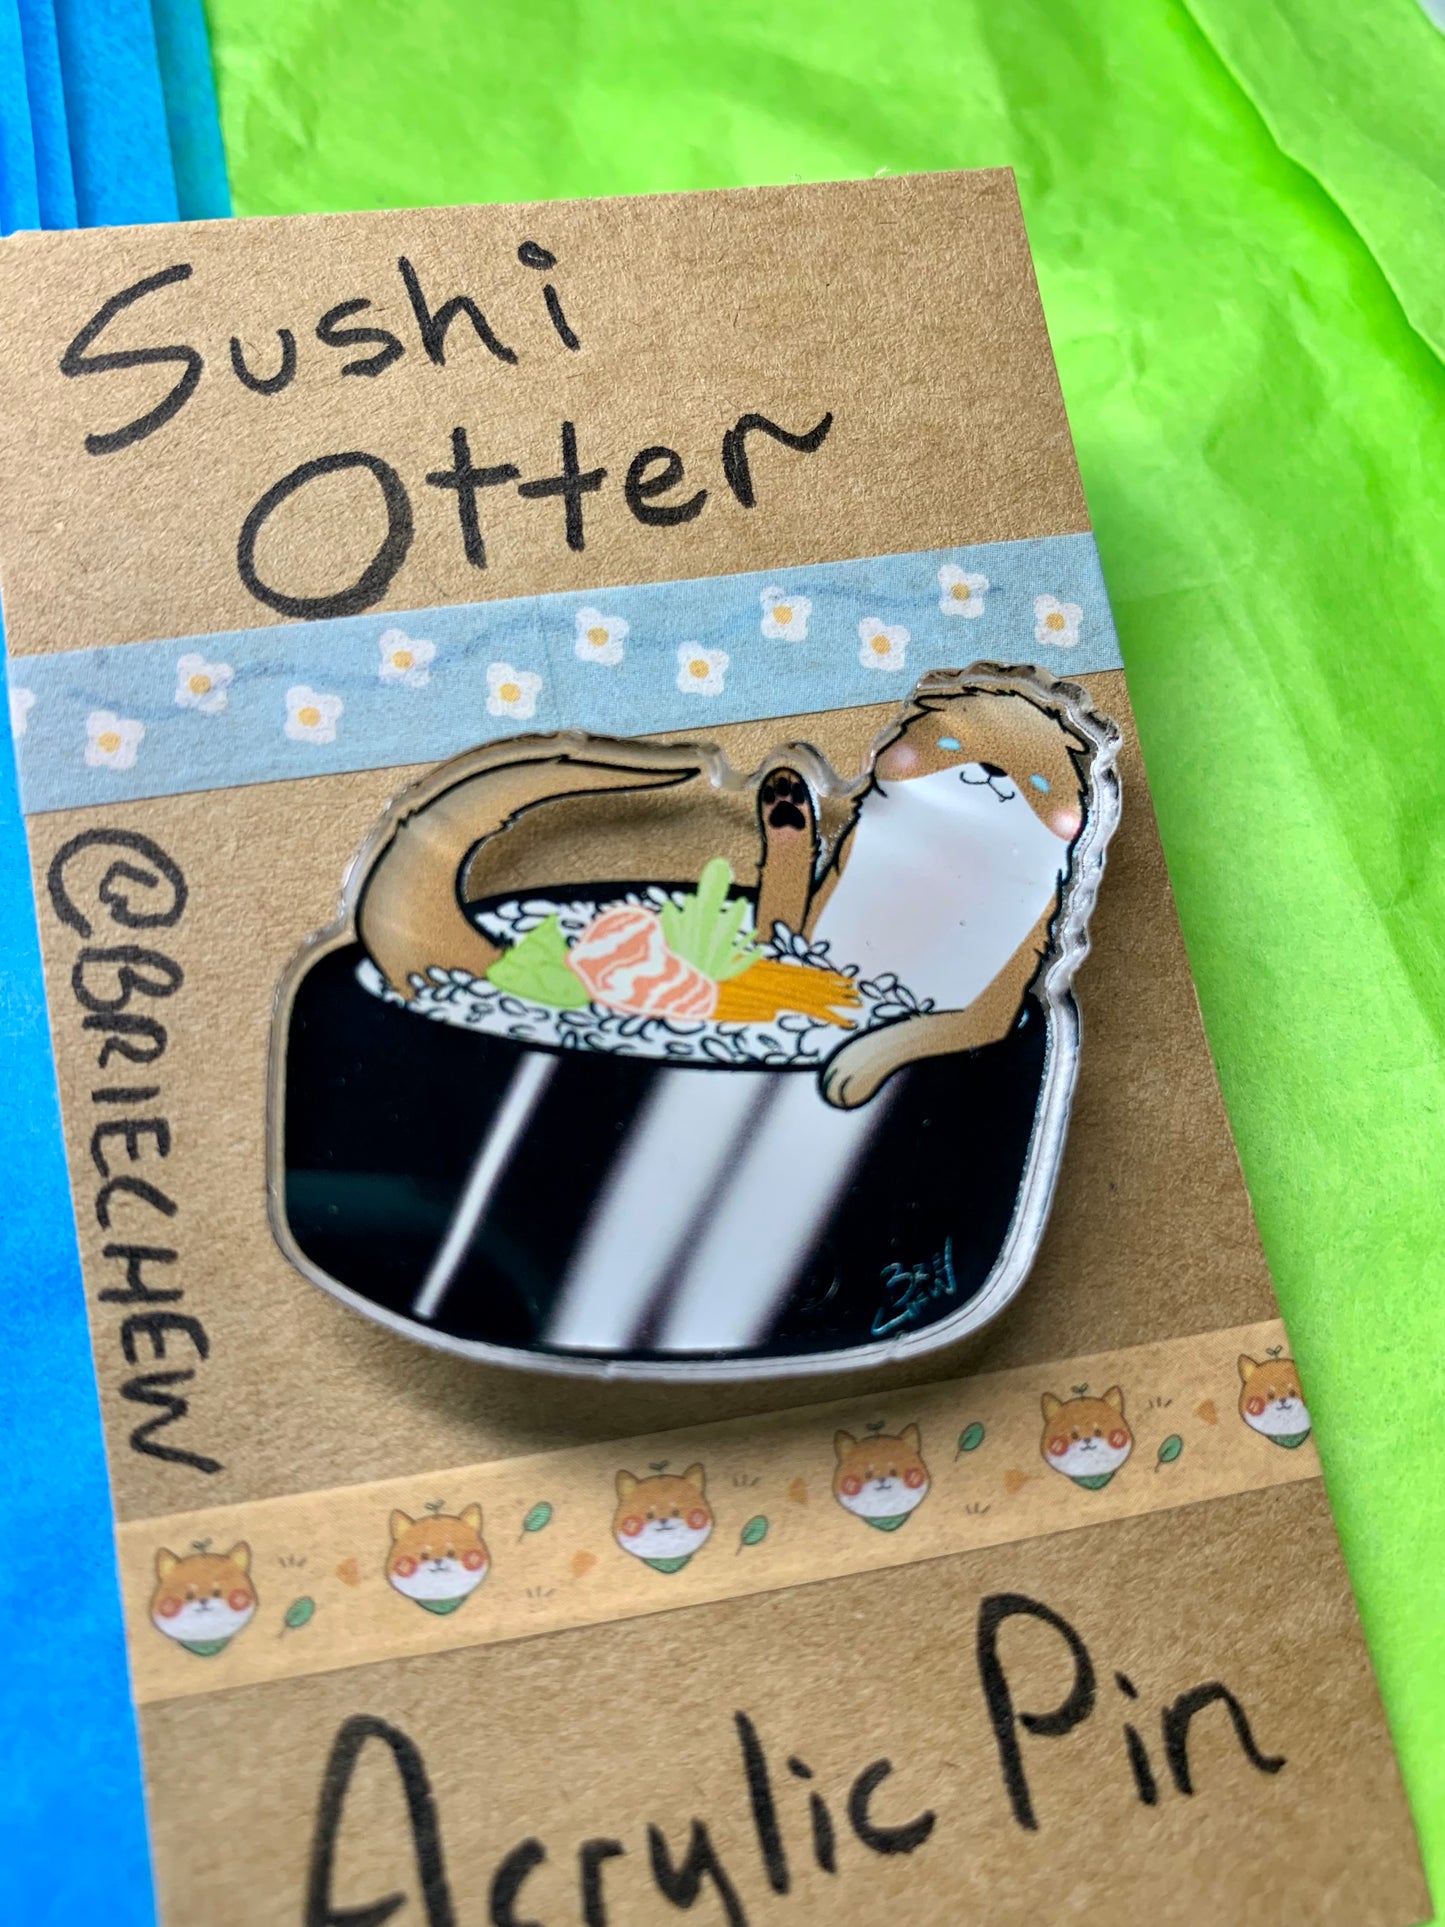 Sushi Otter Acrylic Pin